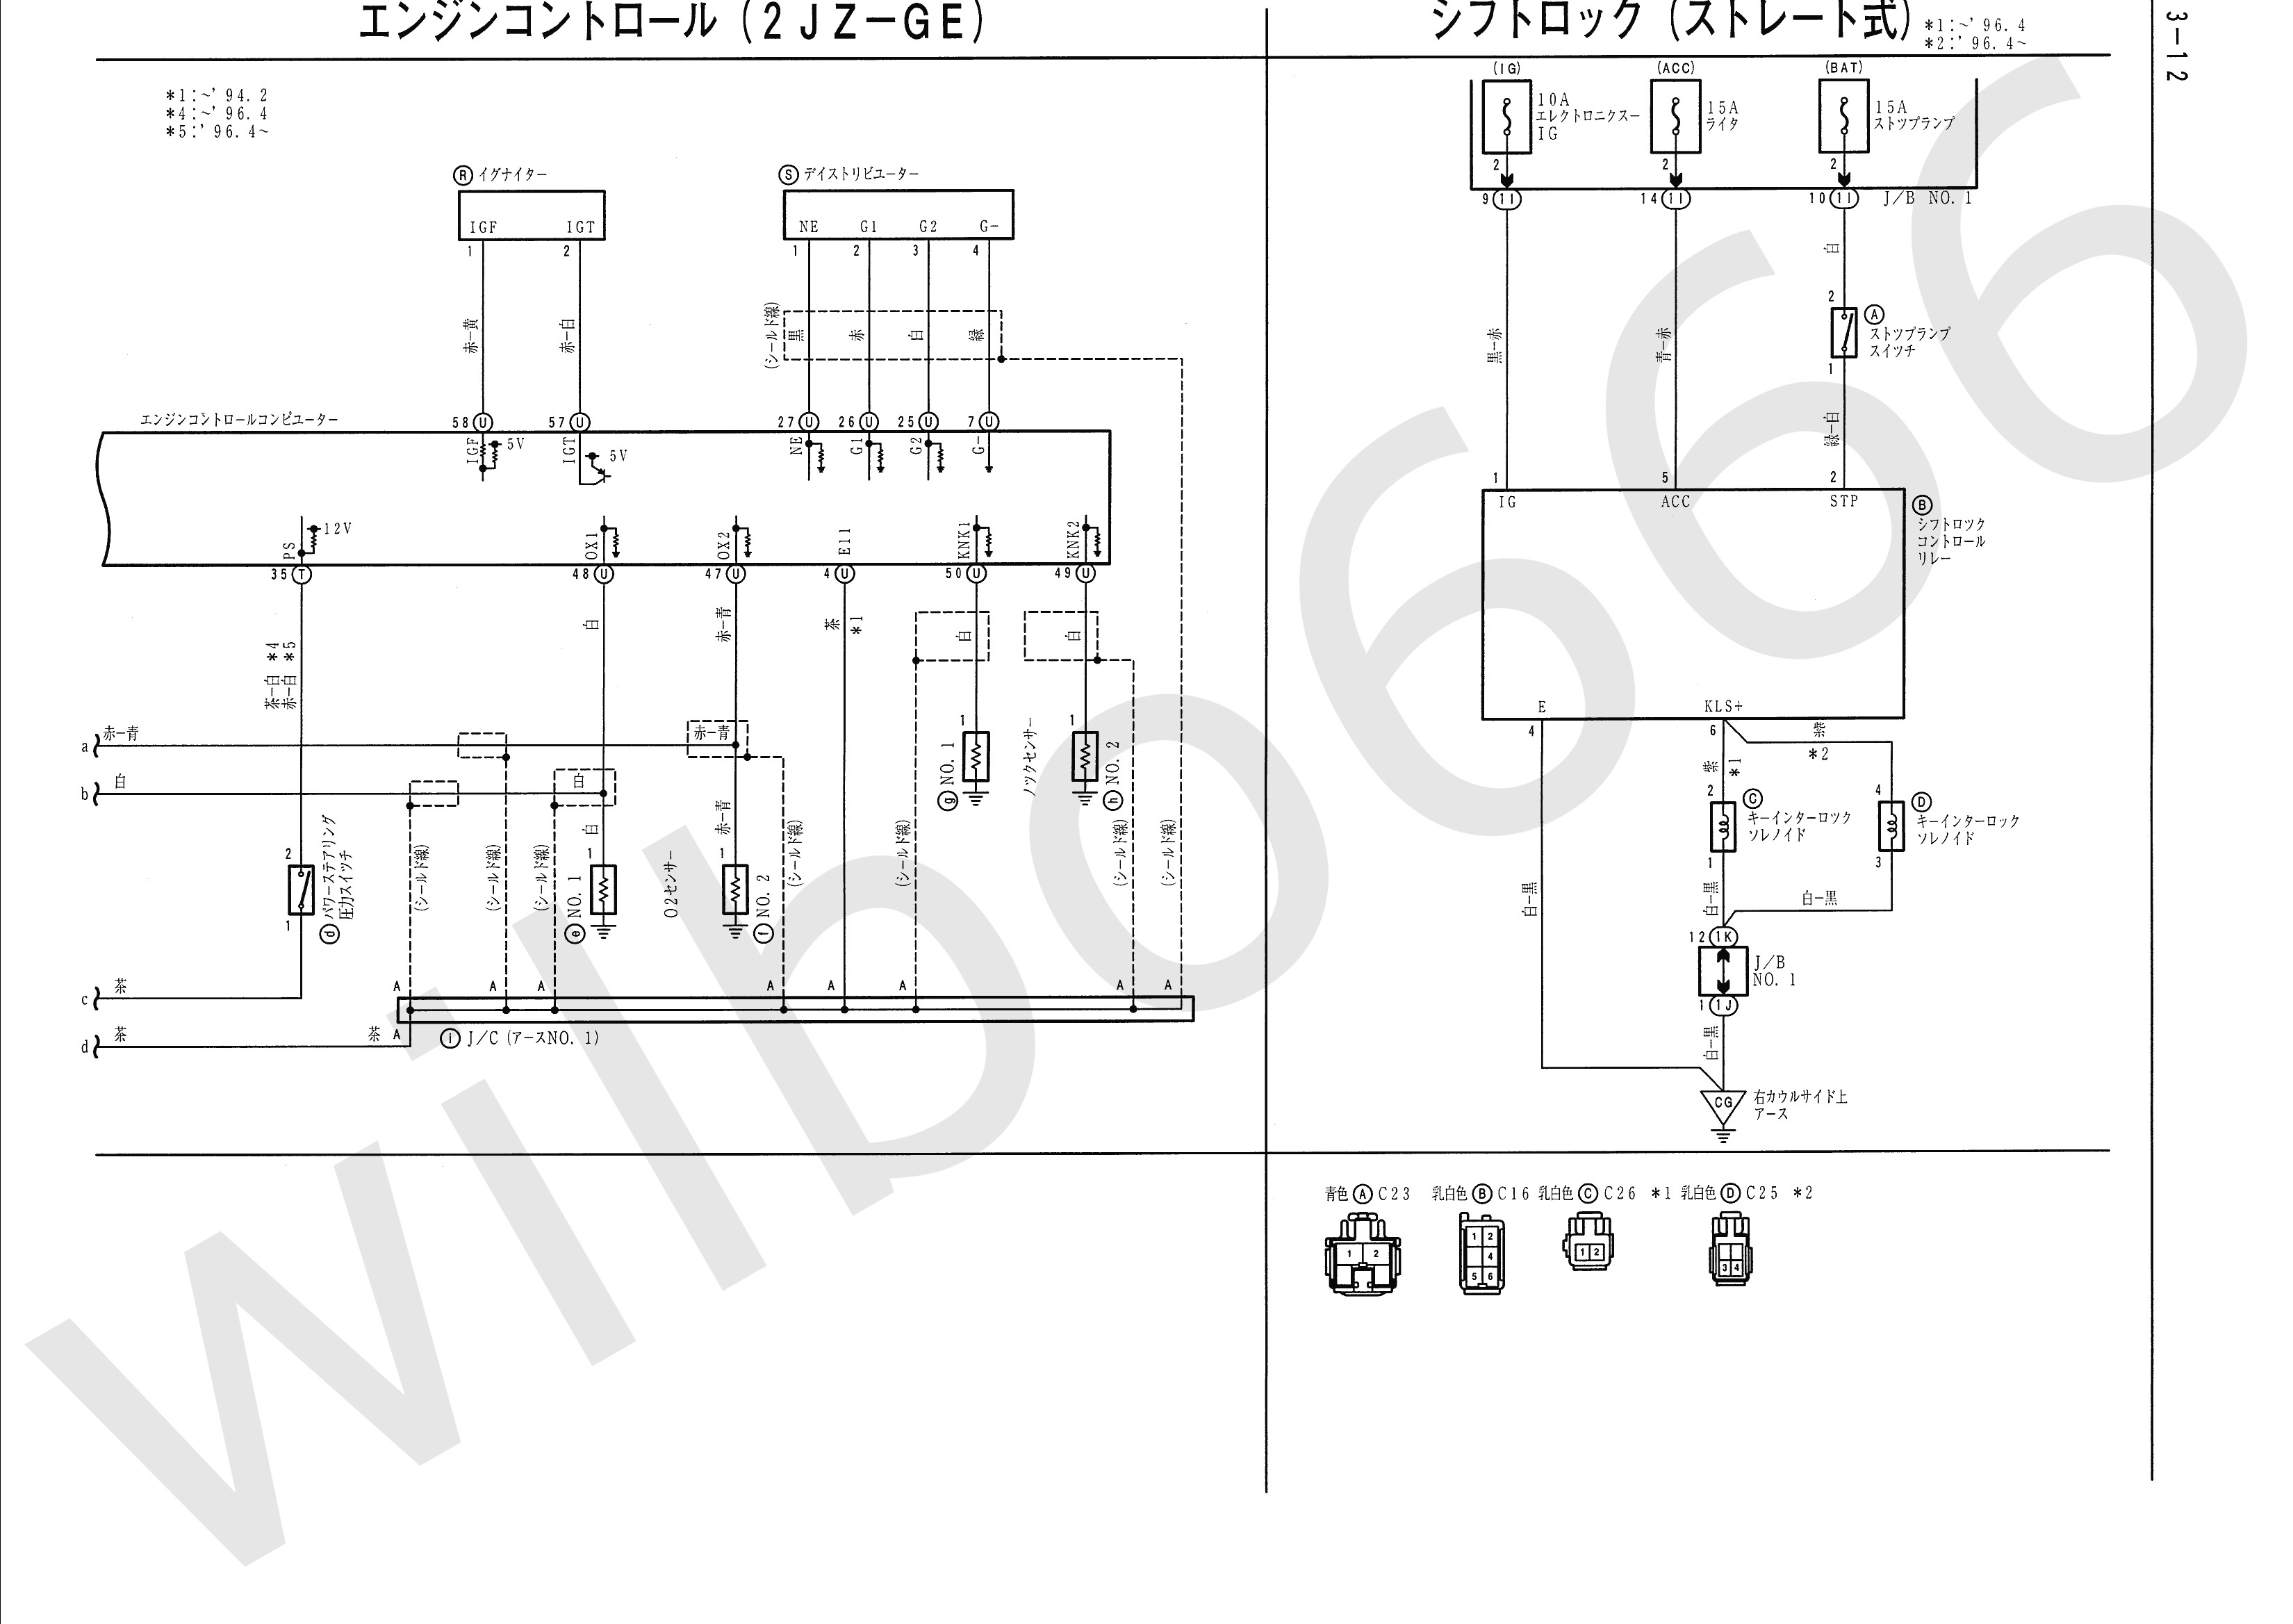 Engine Coolant Temperature Sensor Wiring Diagram Wilbo666 2jz Ge Jza80 Supra Engine Wiring Of Engine Coolant Temperature Sensor Wiring Diagram